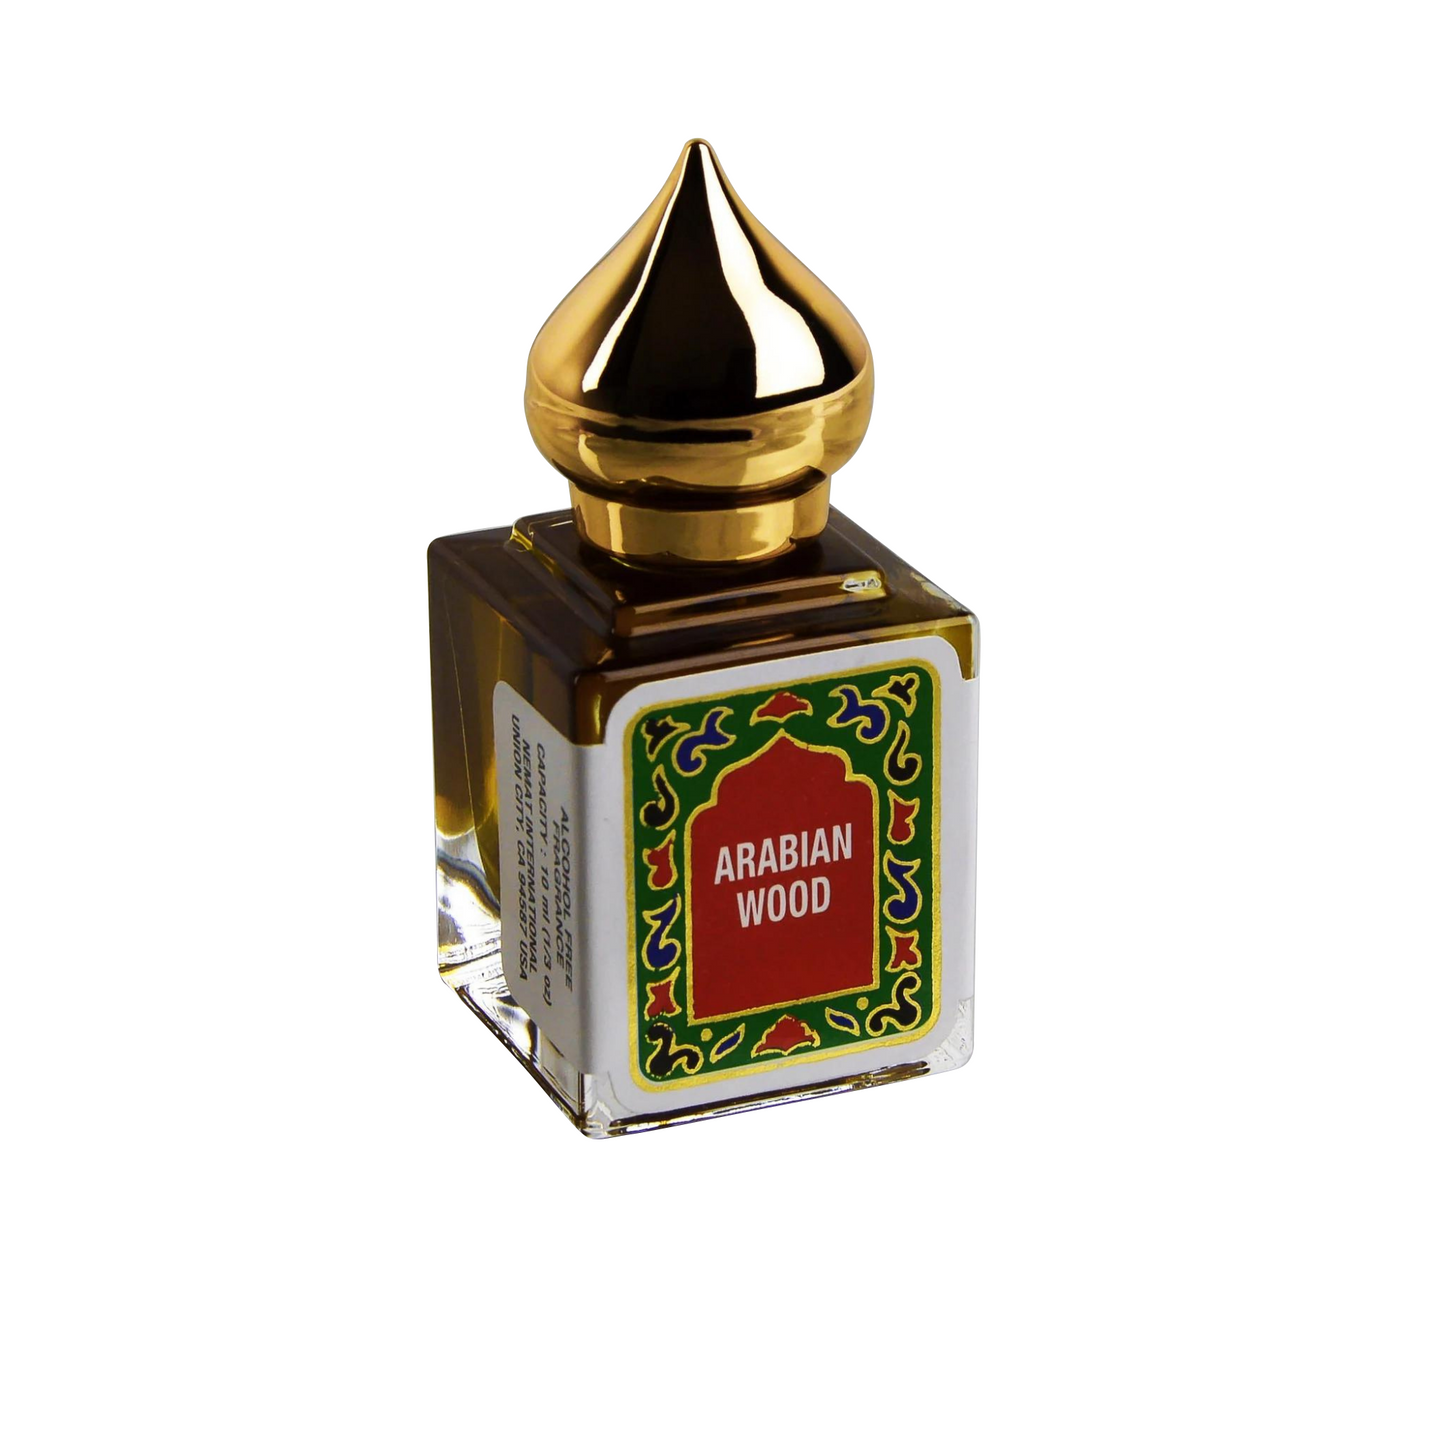 Primary image of Arabian Wood Fragrance Minaret Cap